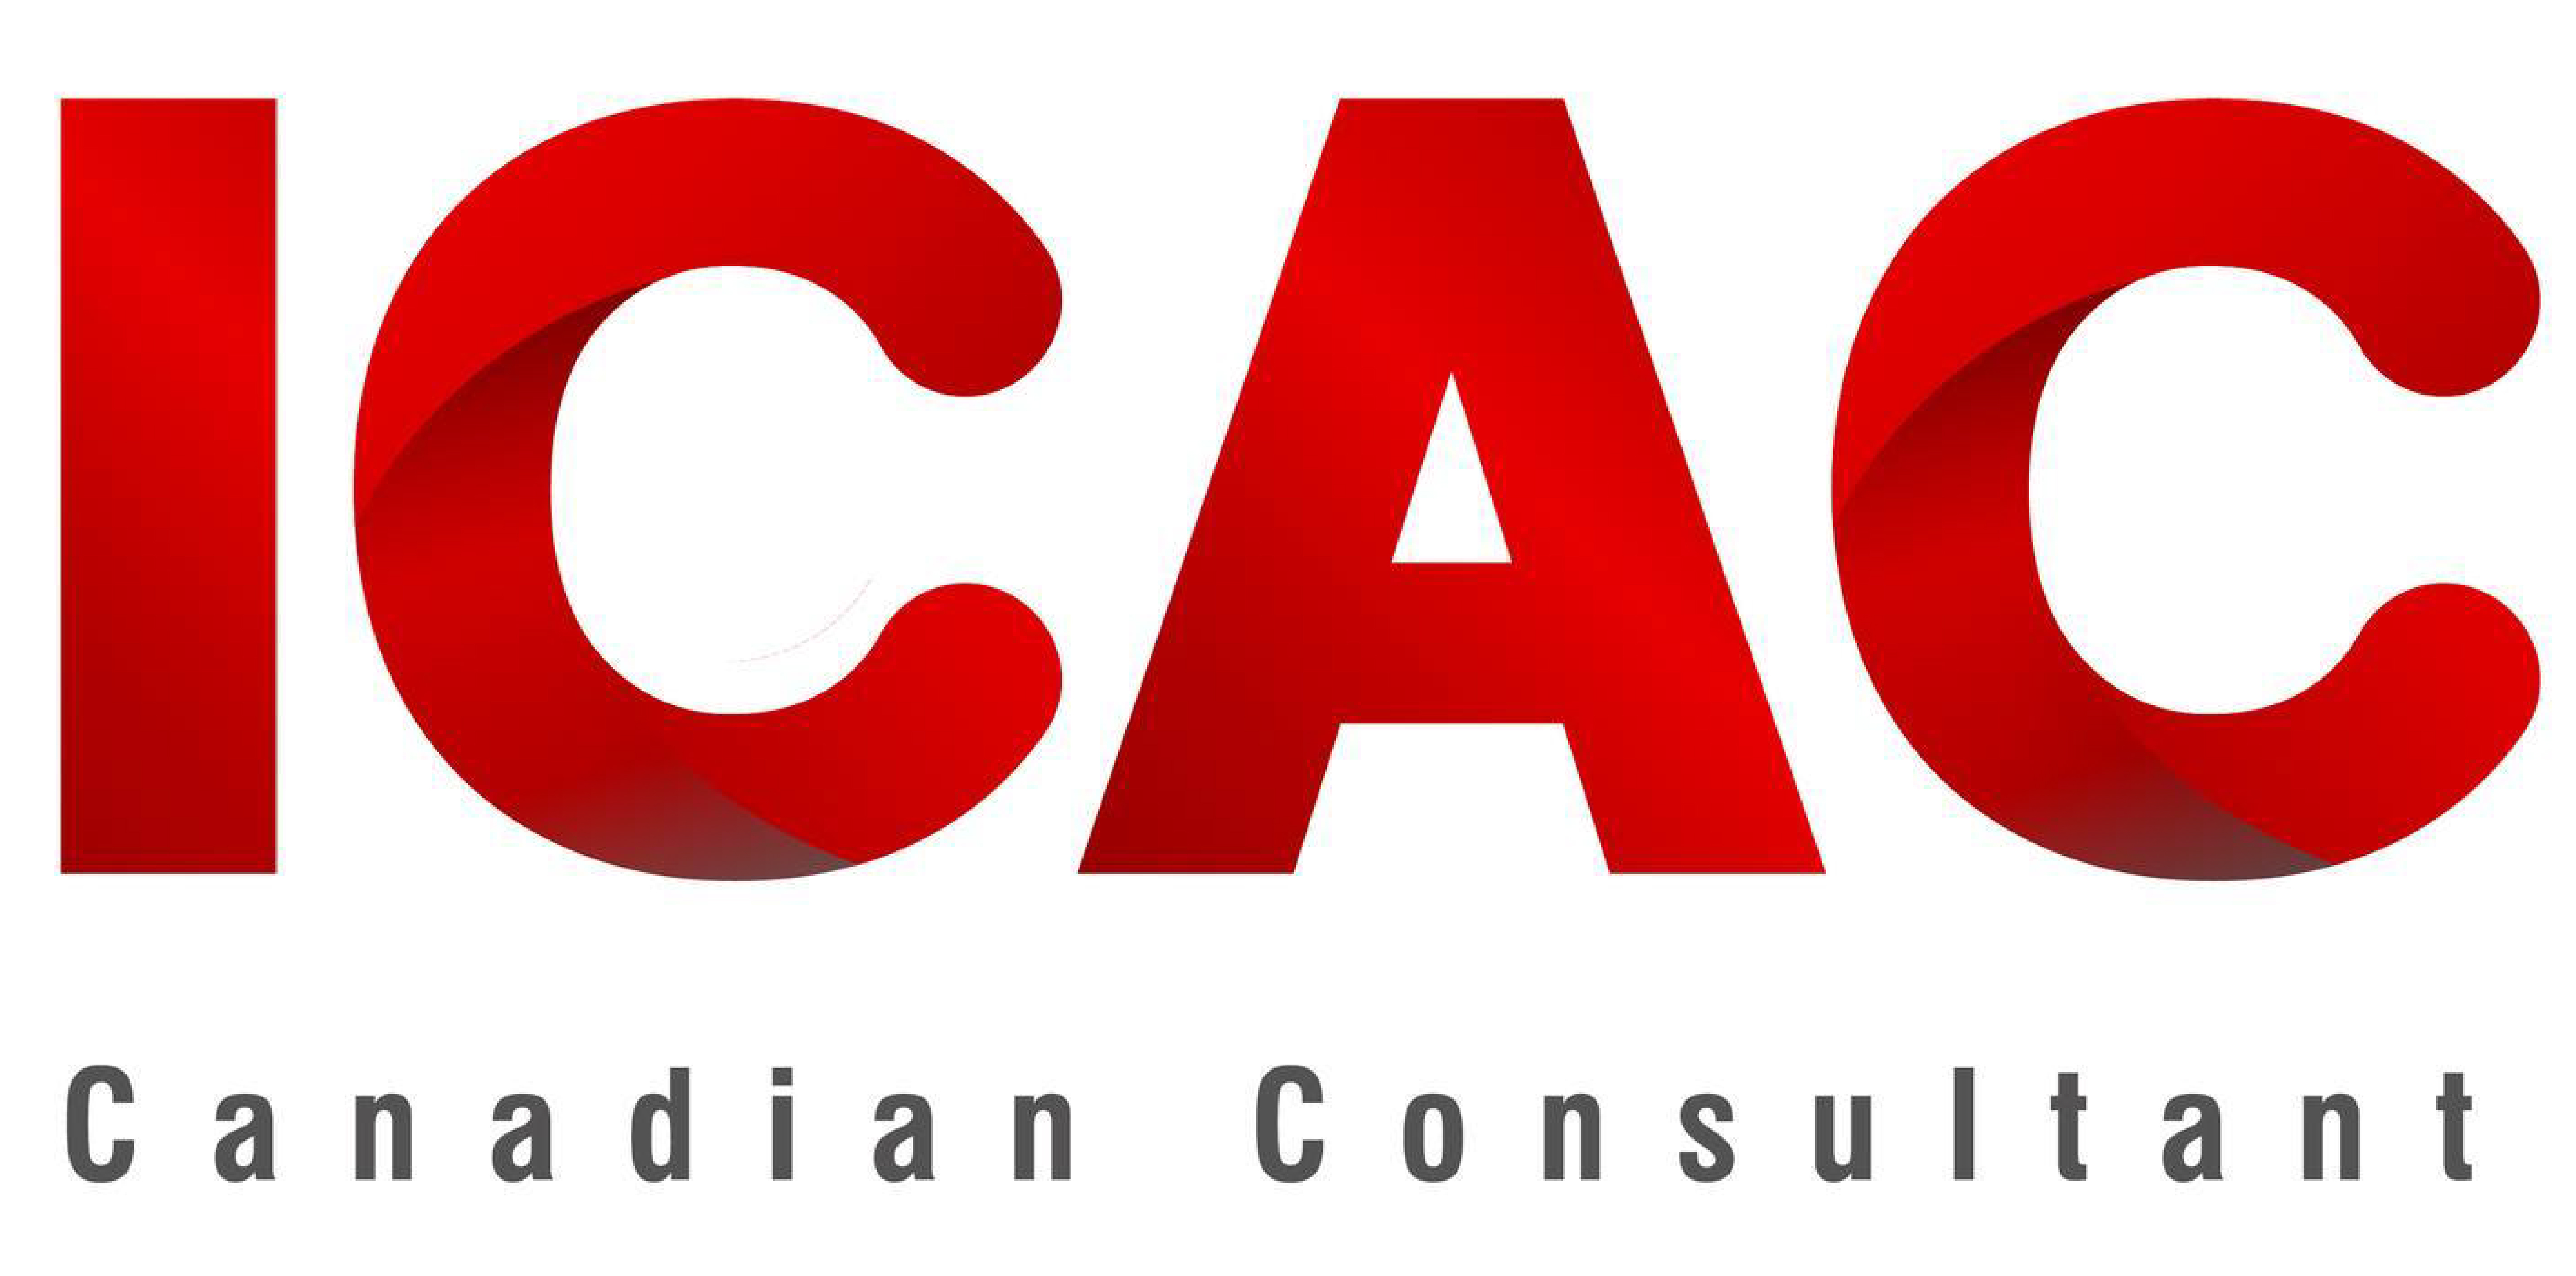 ICAC Canadian